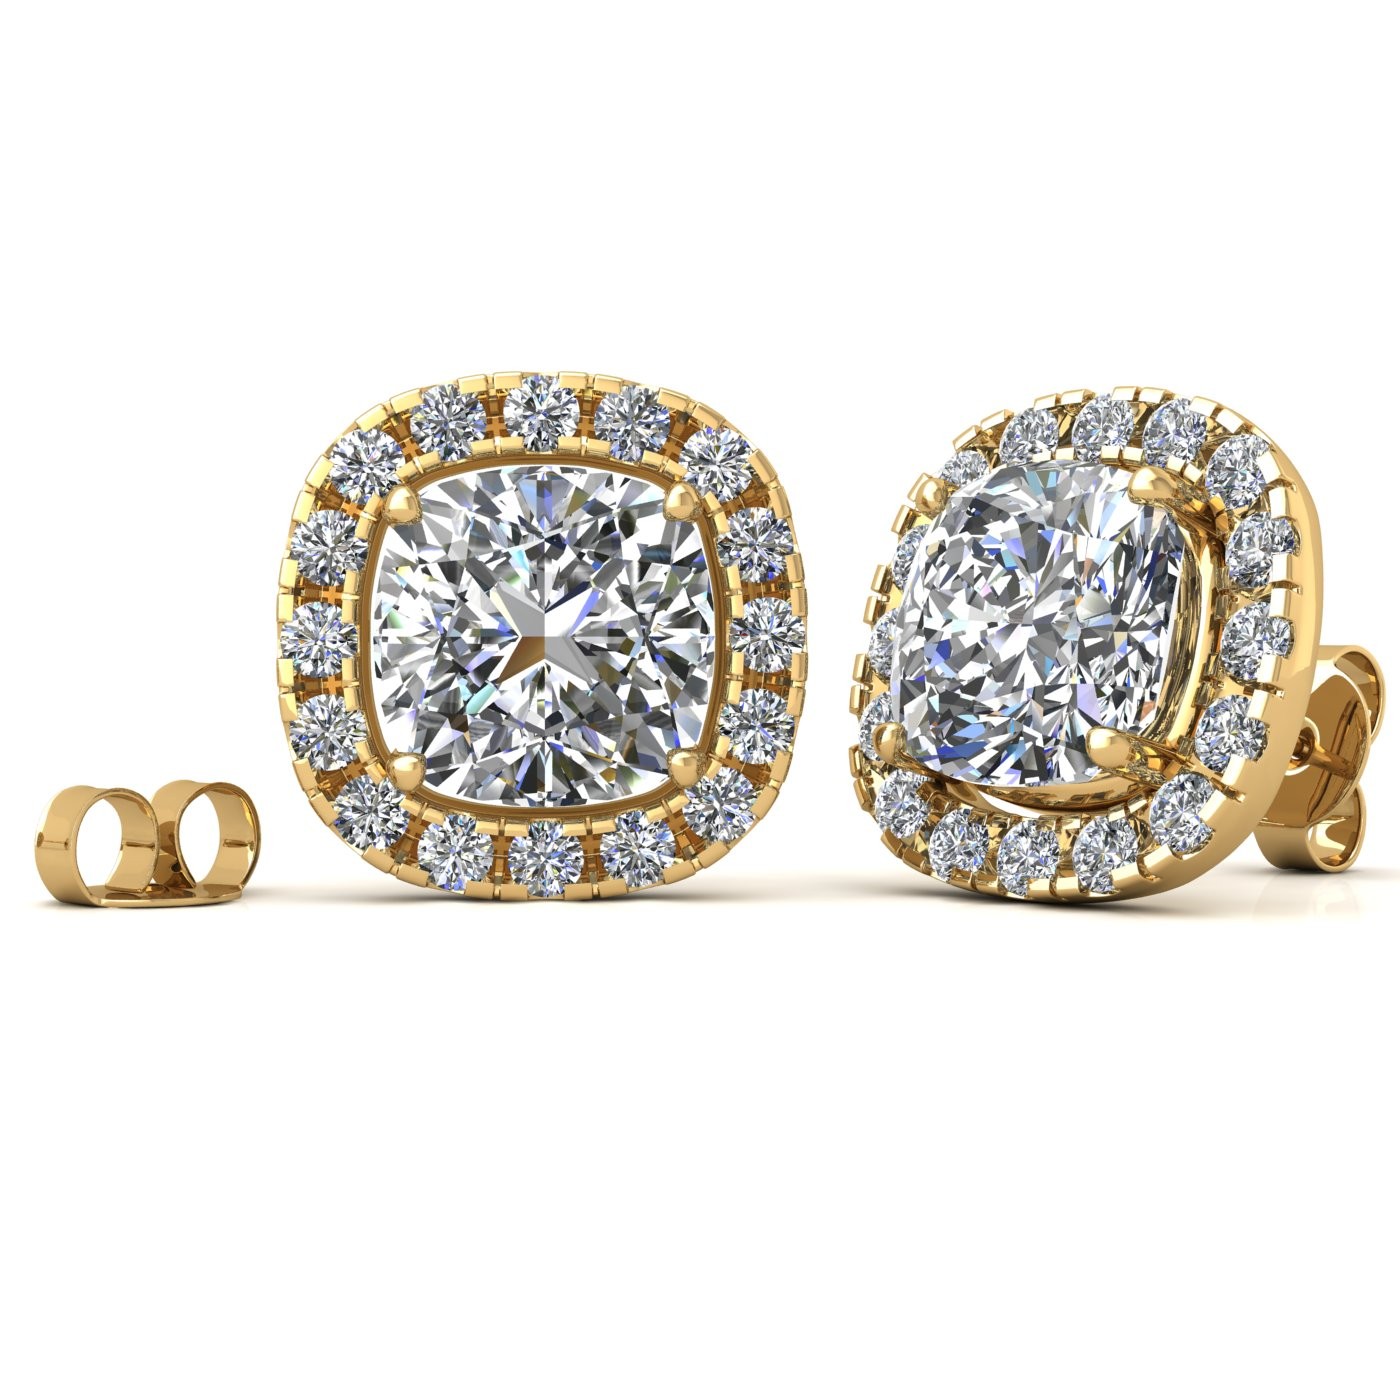 18k yellow gold  2,5 ct each (5,0 tcw) 4 prongs cushion shape diamond earrings with diamond pavÉ set halo